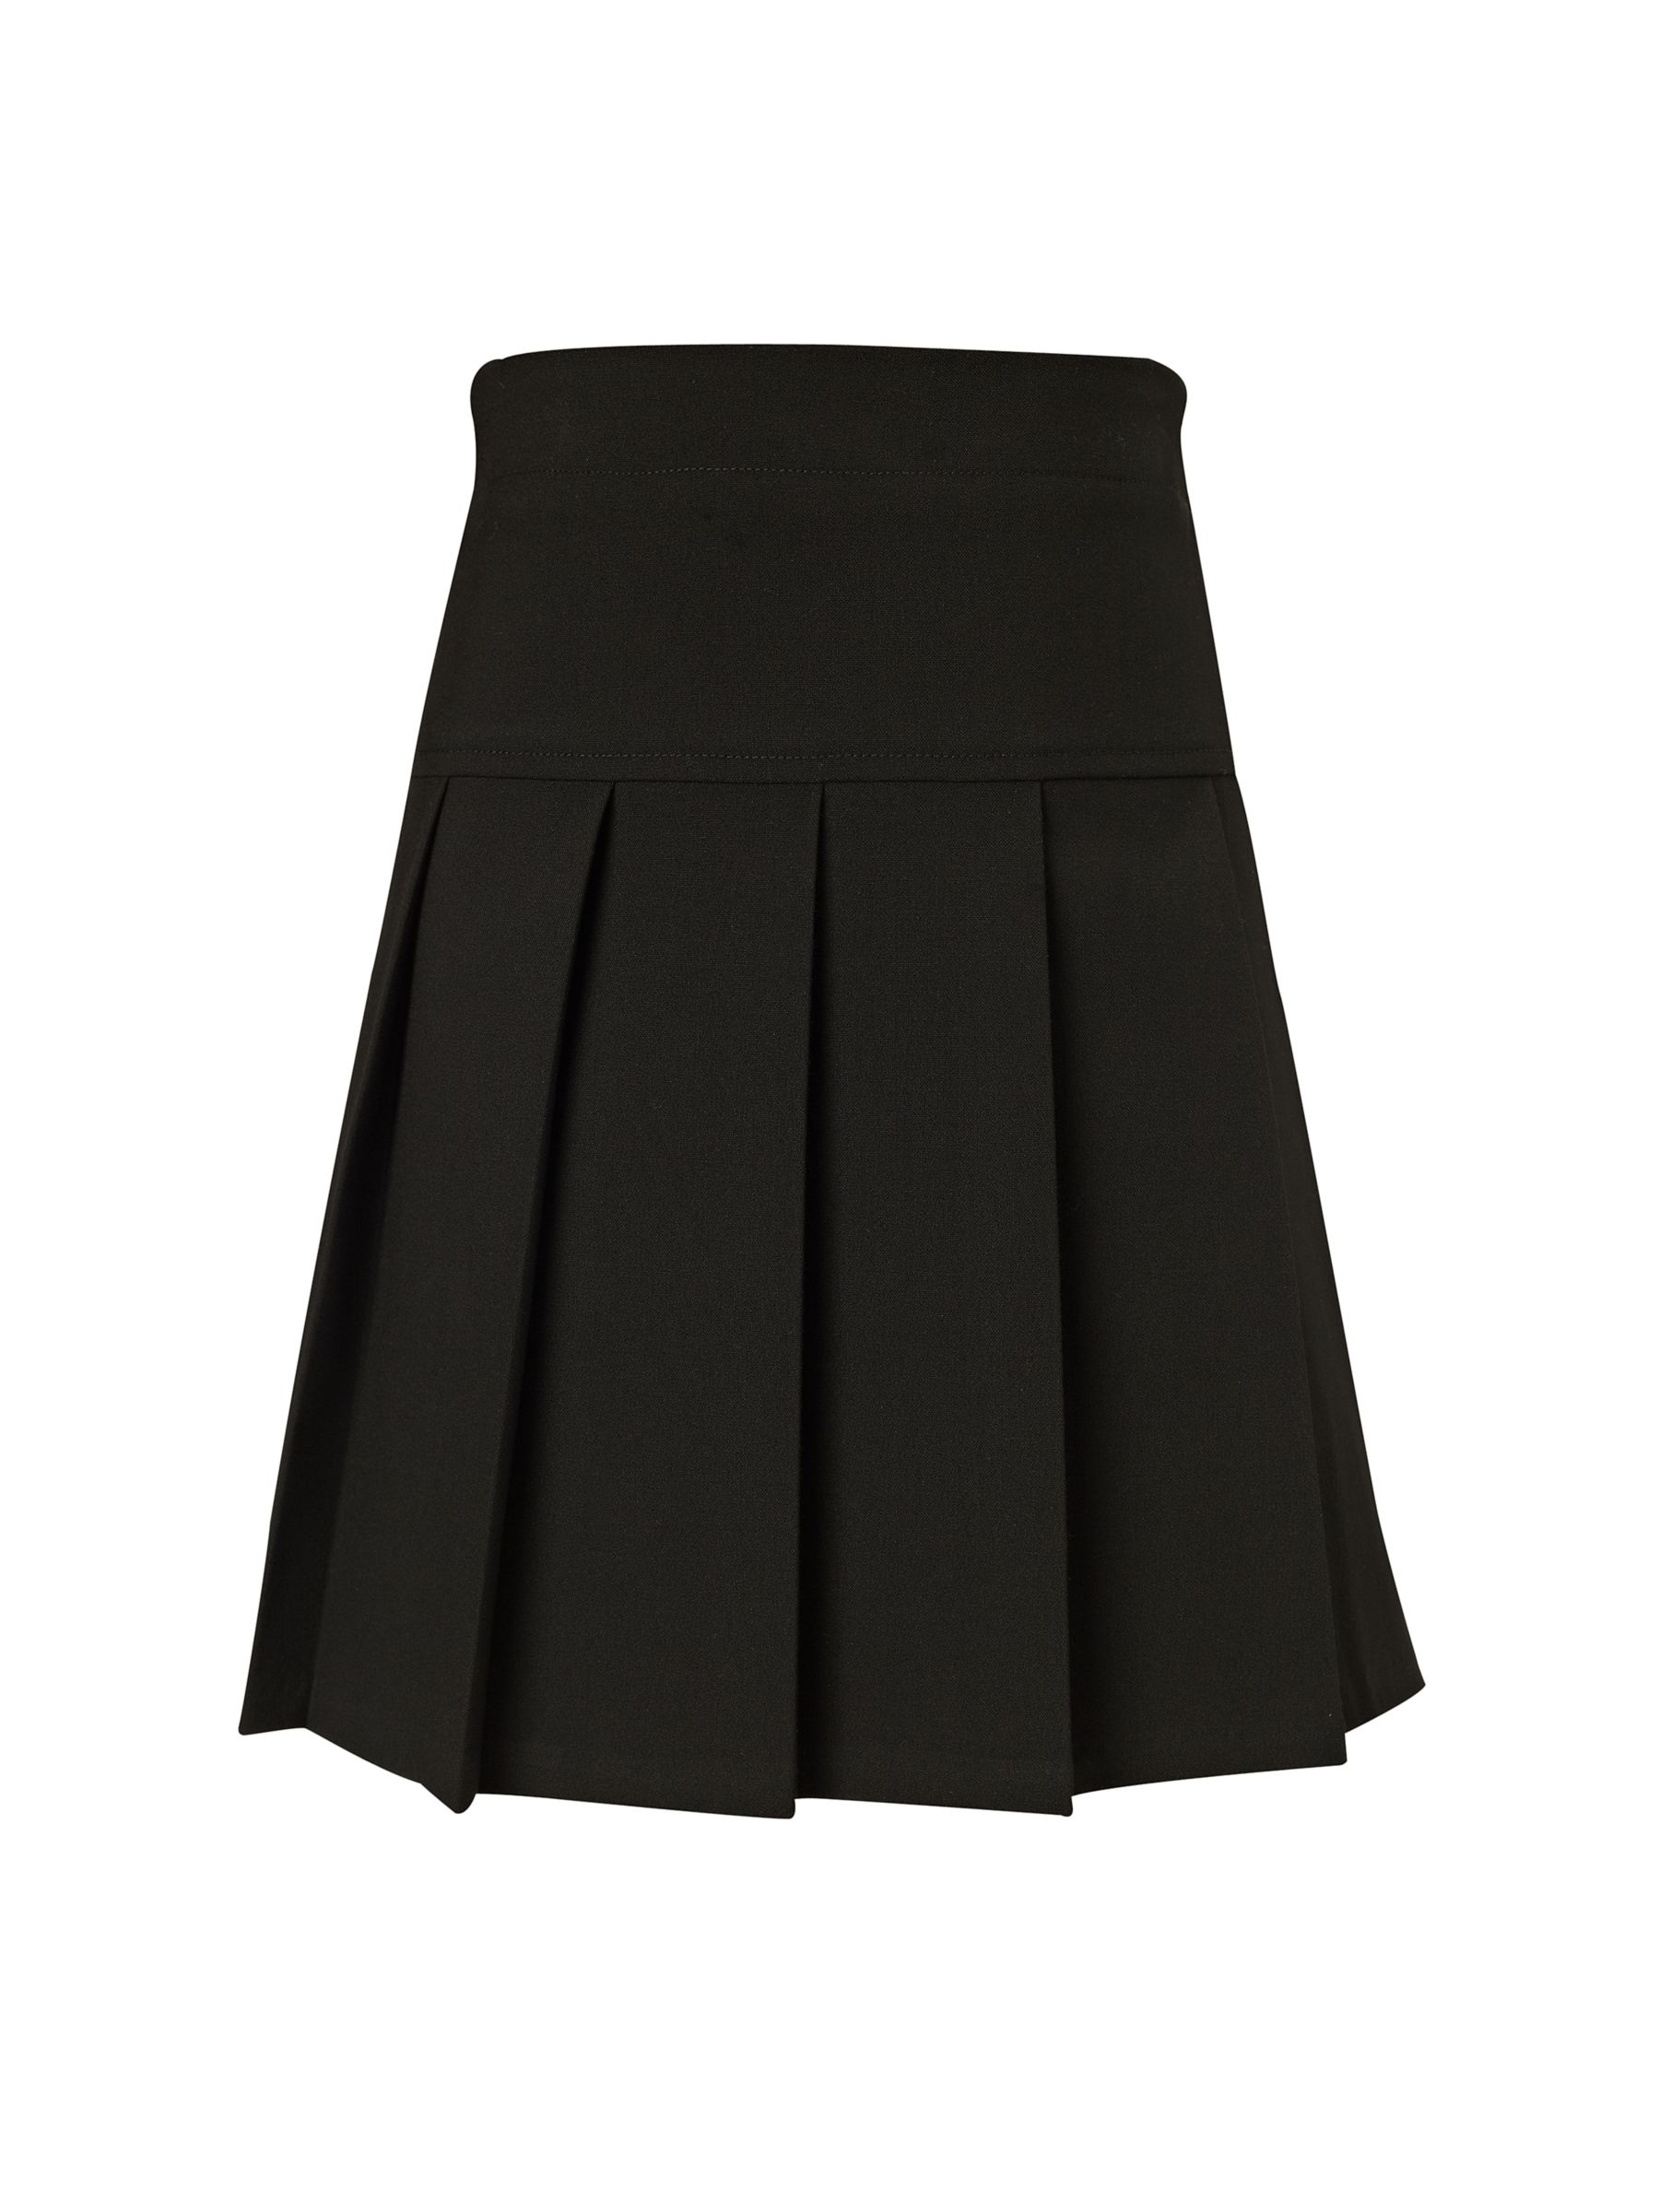 Buy John Lewis Girls' Adjustable Waist Stain Resistant Panel Pleated School Skirt Online at johnlewis.com